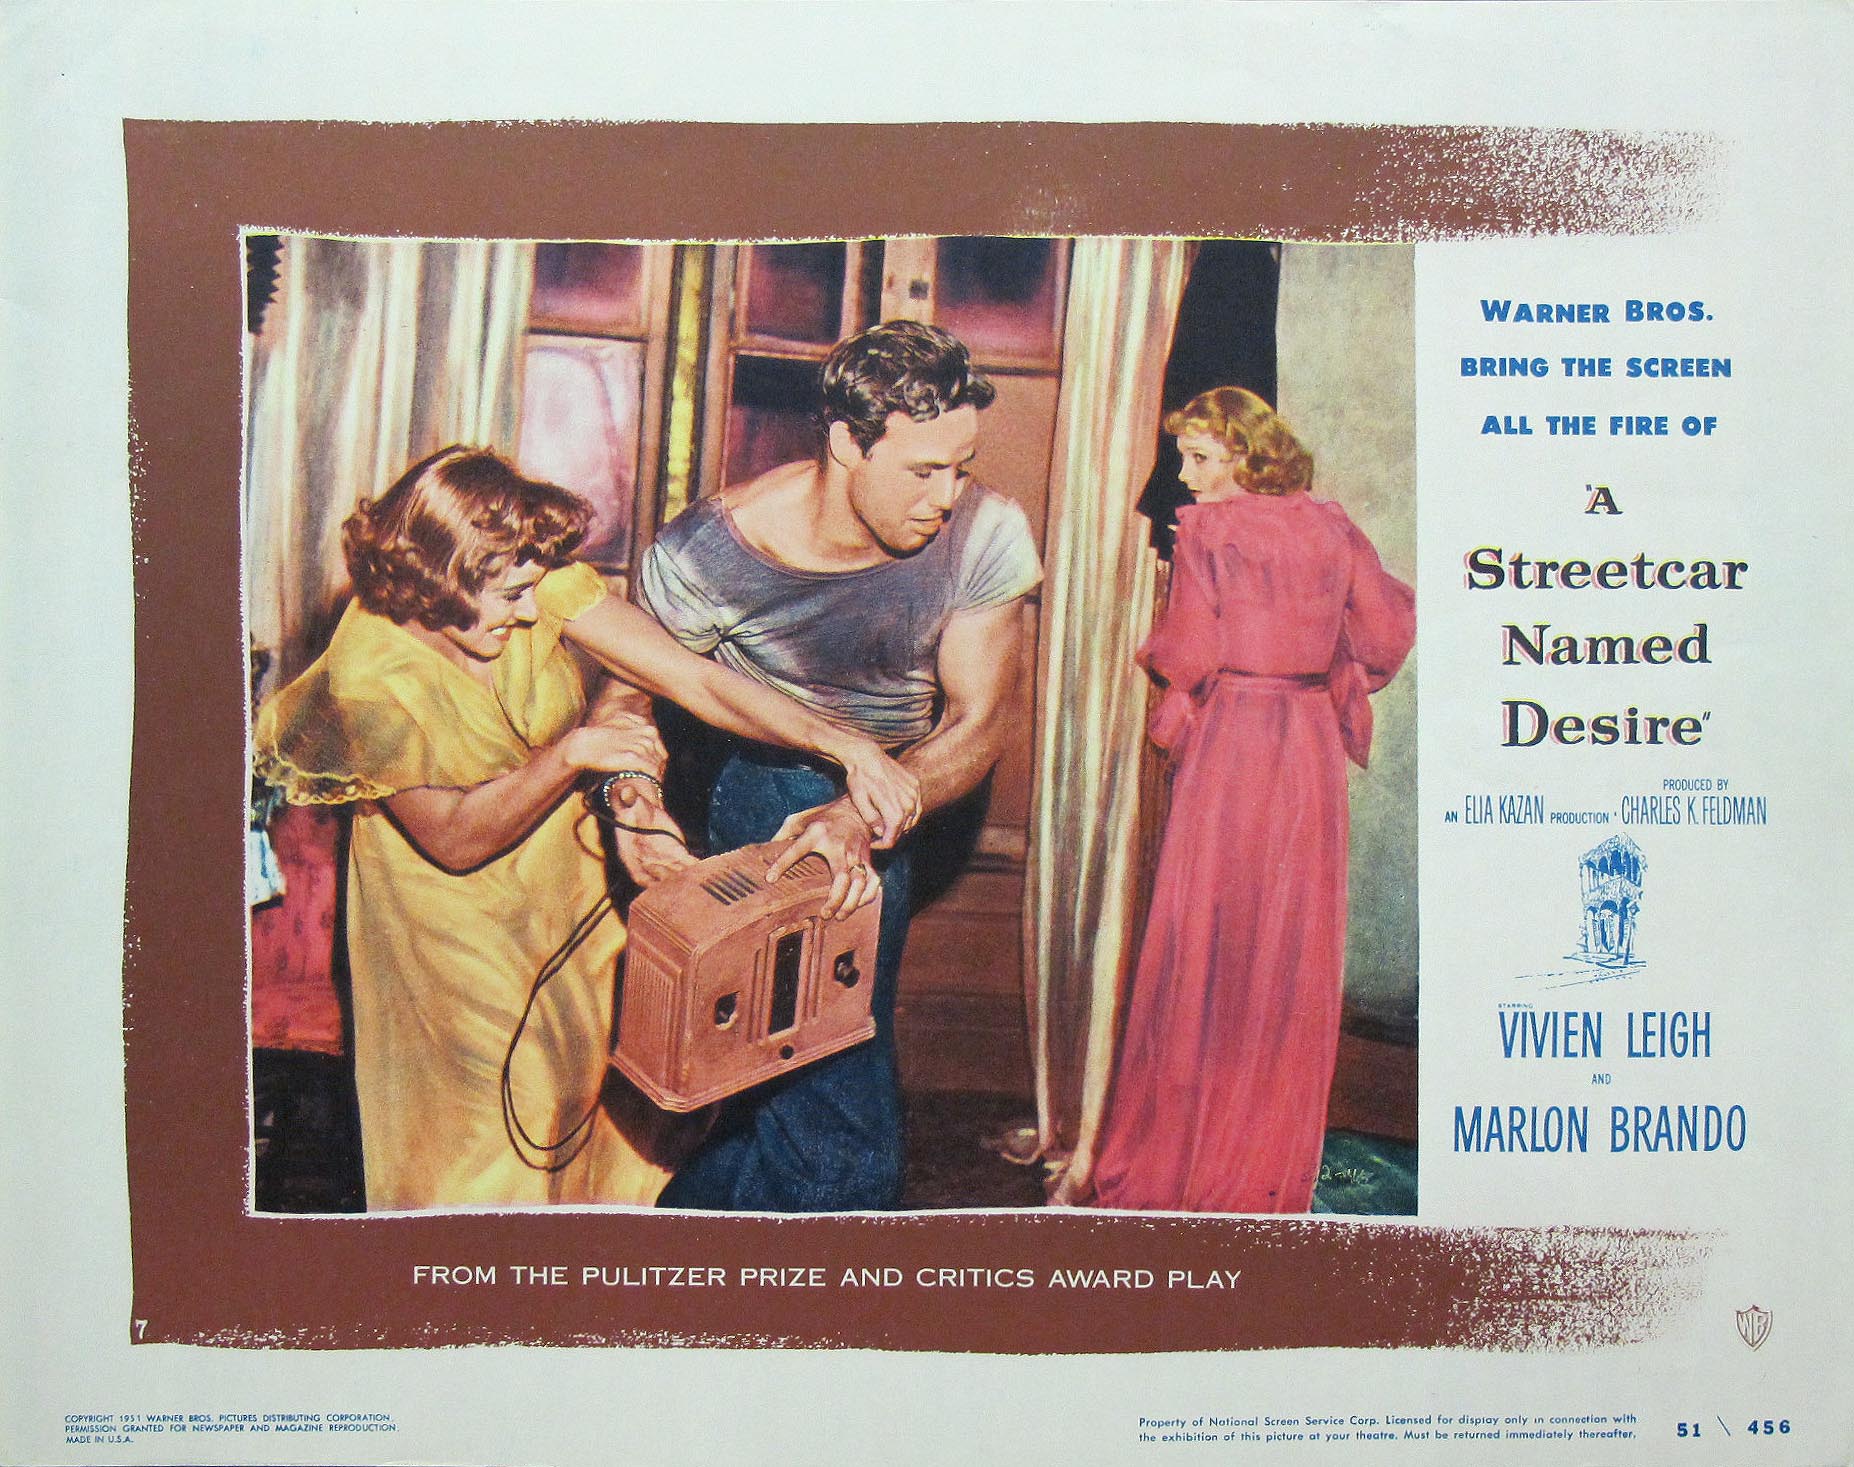 Named desire. A Streetcar named Desire 1951. Трамвай желание Марлон Брандо Вивьен ли. A Streetcar named Desire by Tennessee Williams.